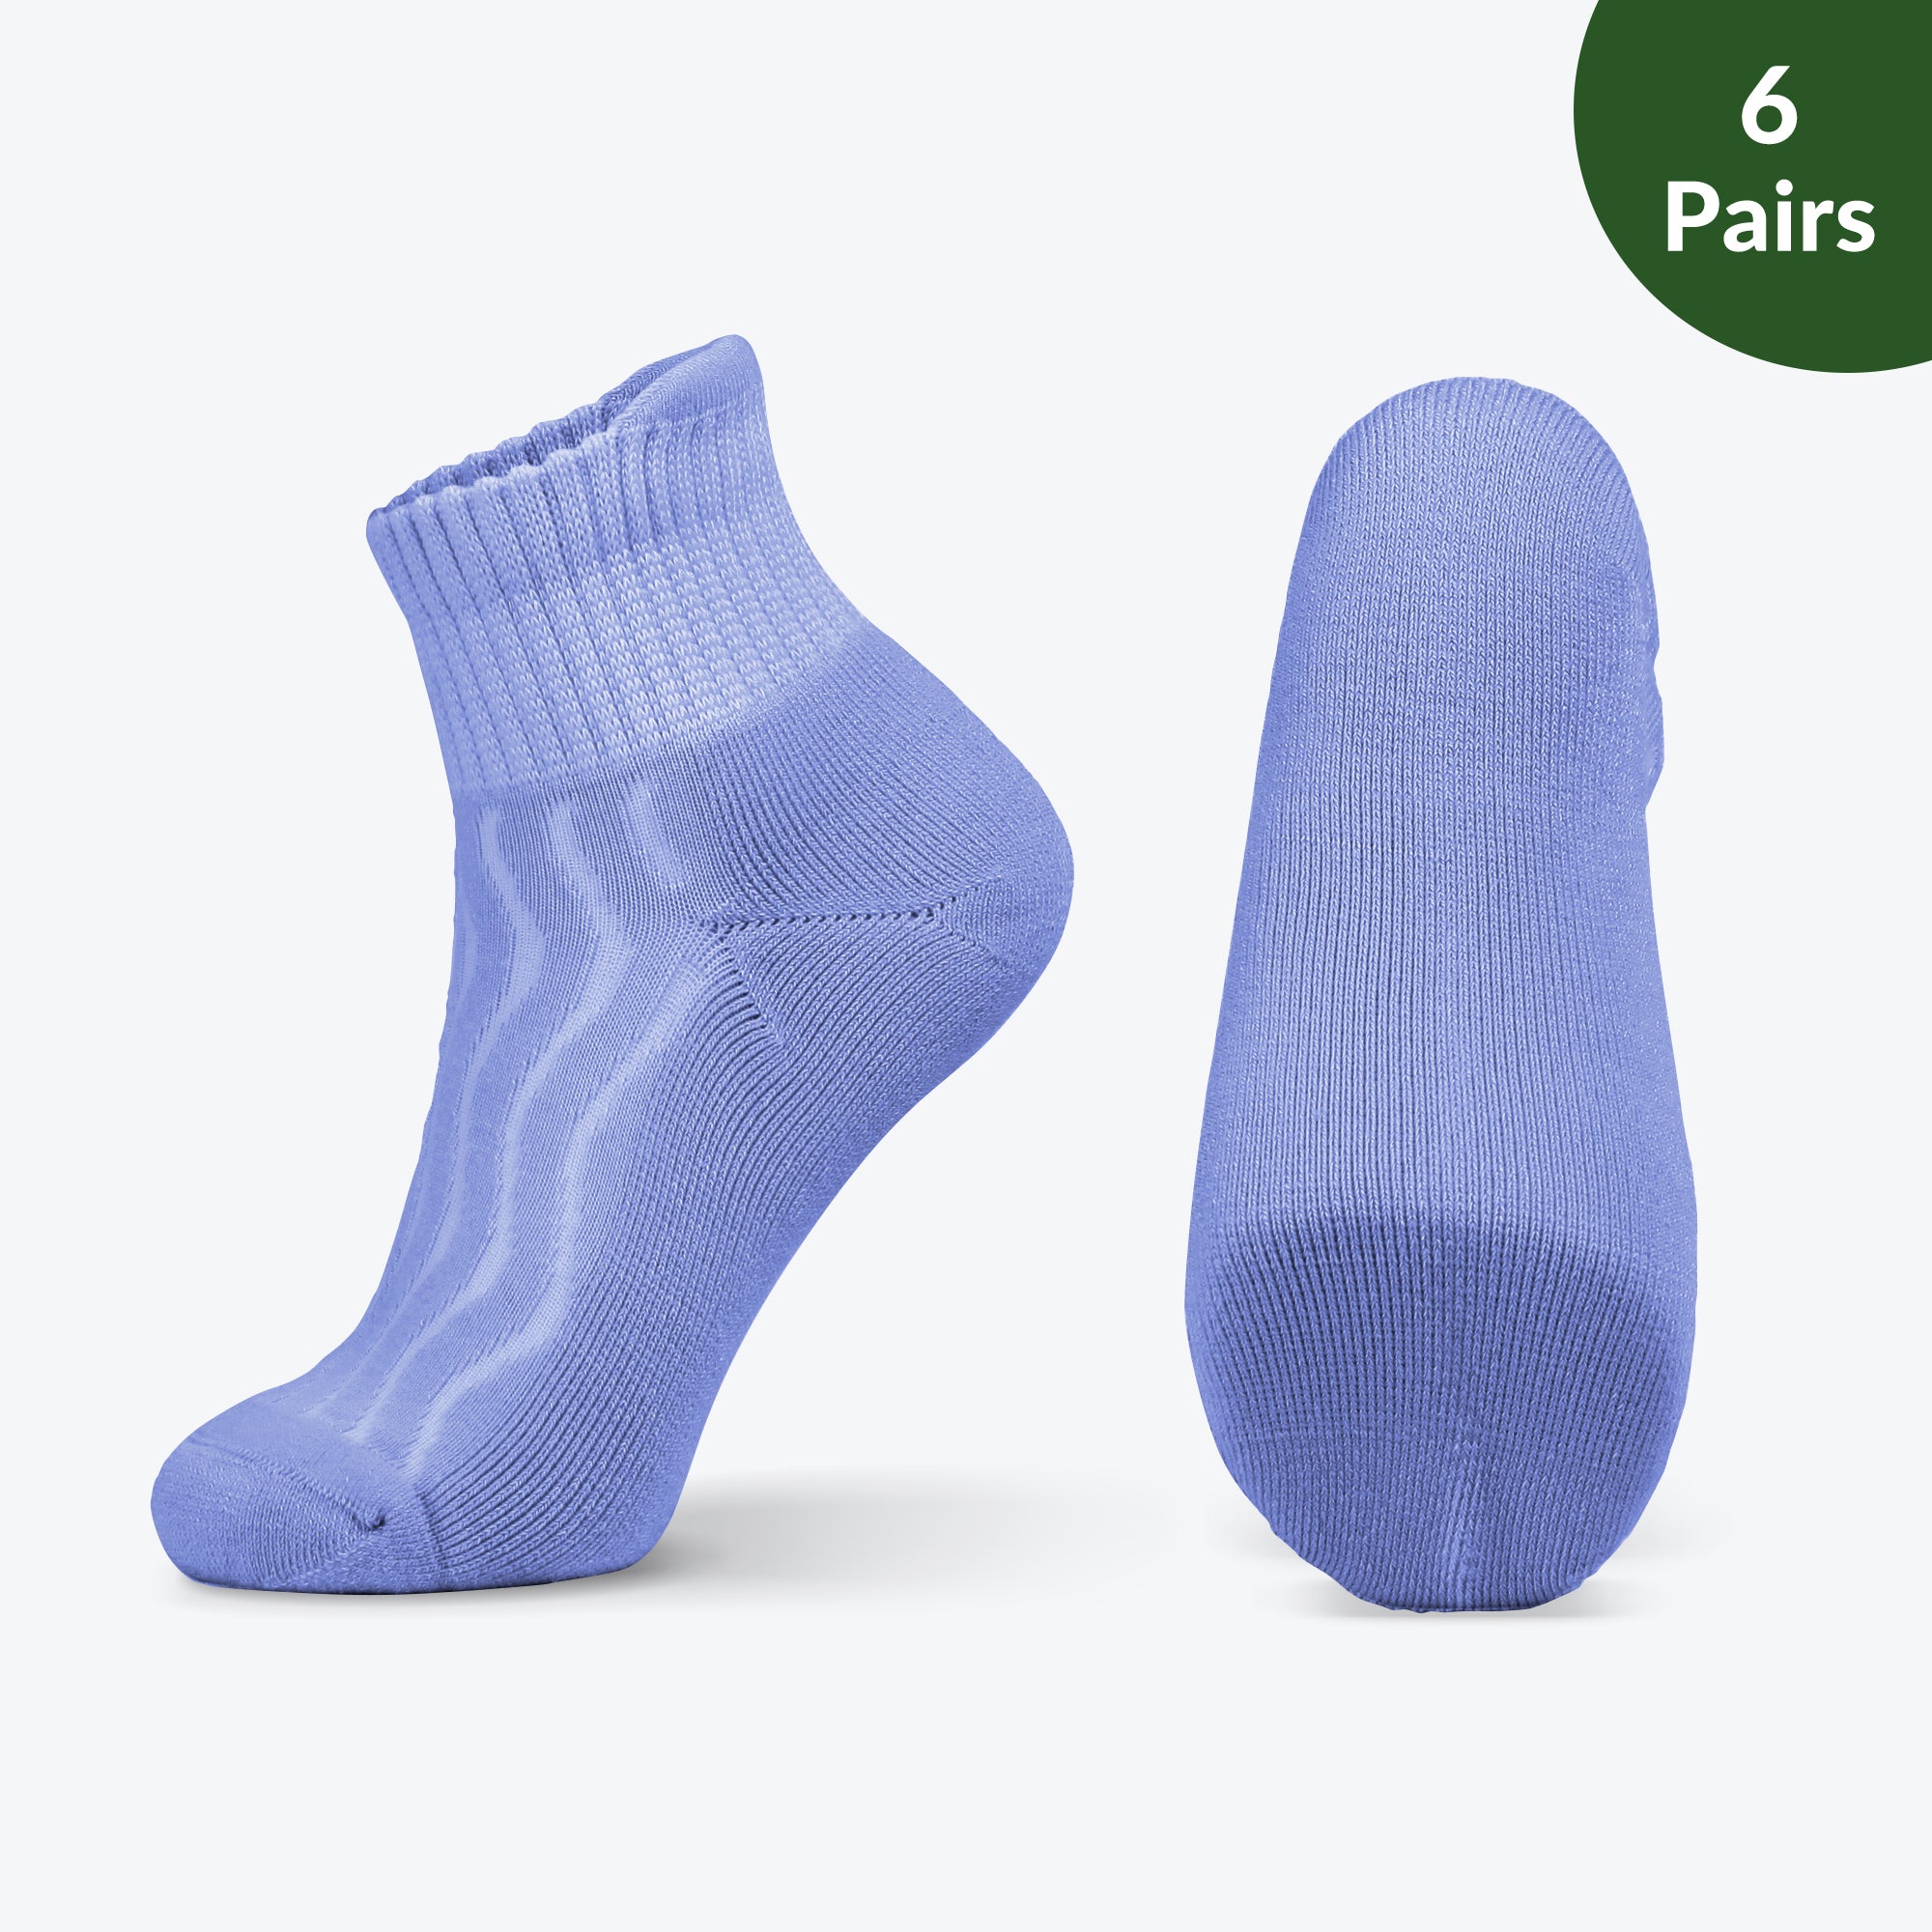 Wide non-binding Bamboo diabetic socks, seamless toe, air vent